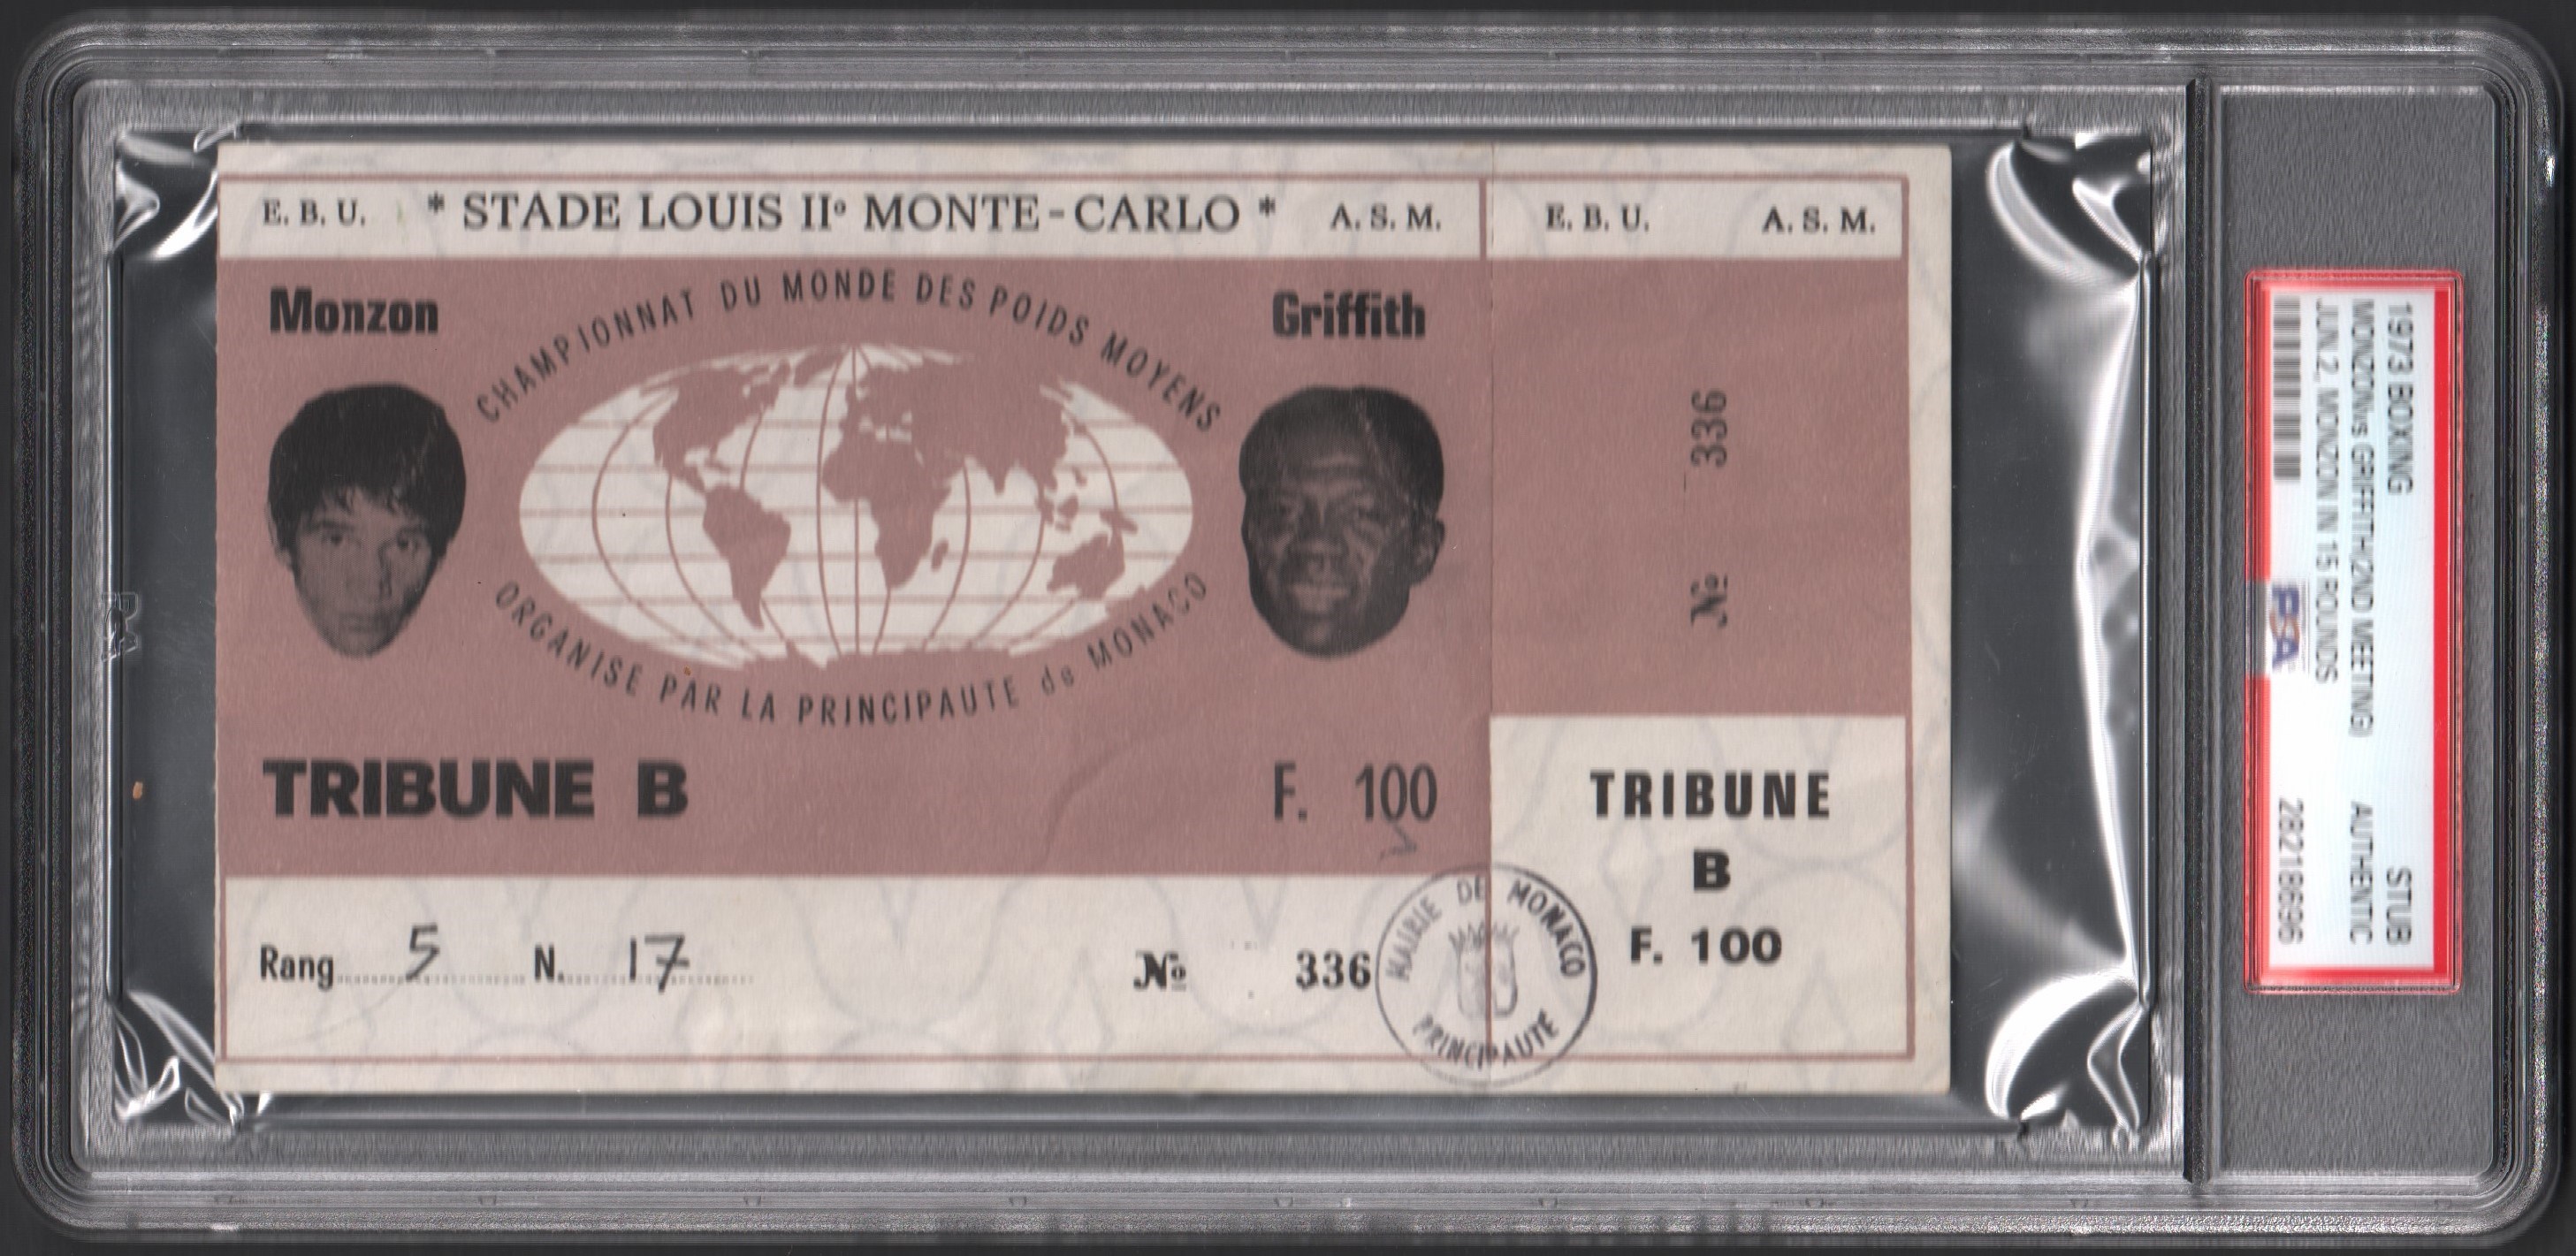 - 1973 Carlos Monzon vs. Emile Griffith Ticket Stub